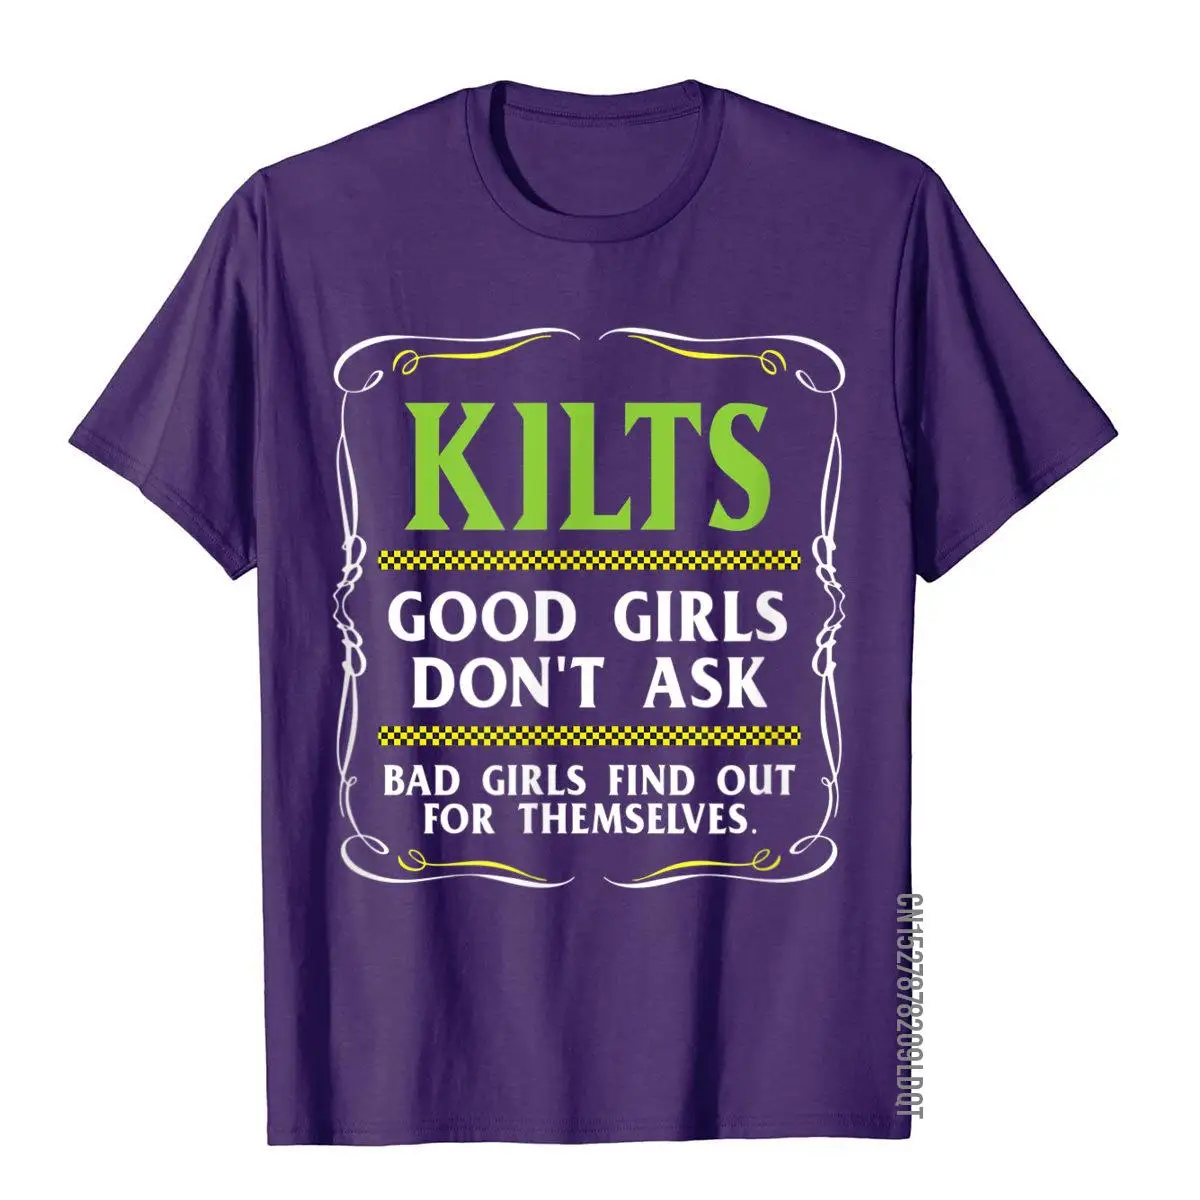 Kilts Good Girls Don't Ask T-shirt Funny Scottish Tee__B11576purple